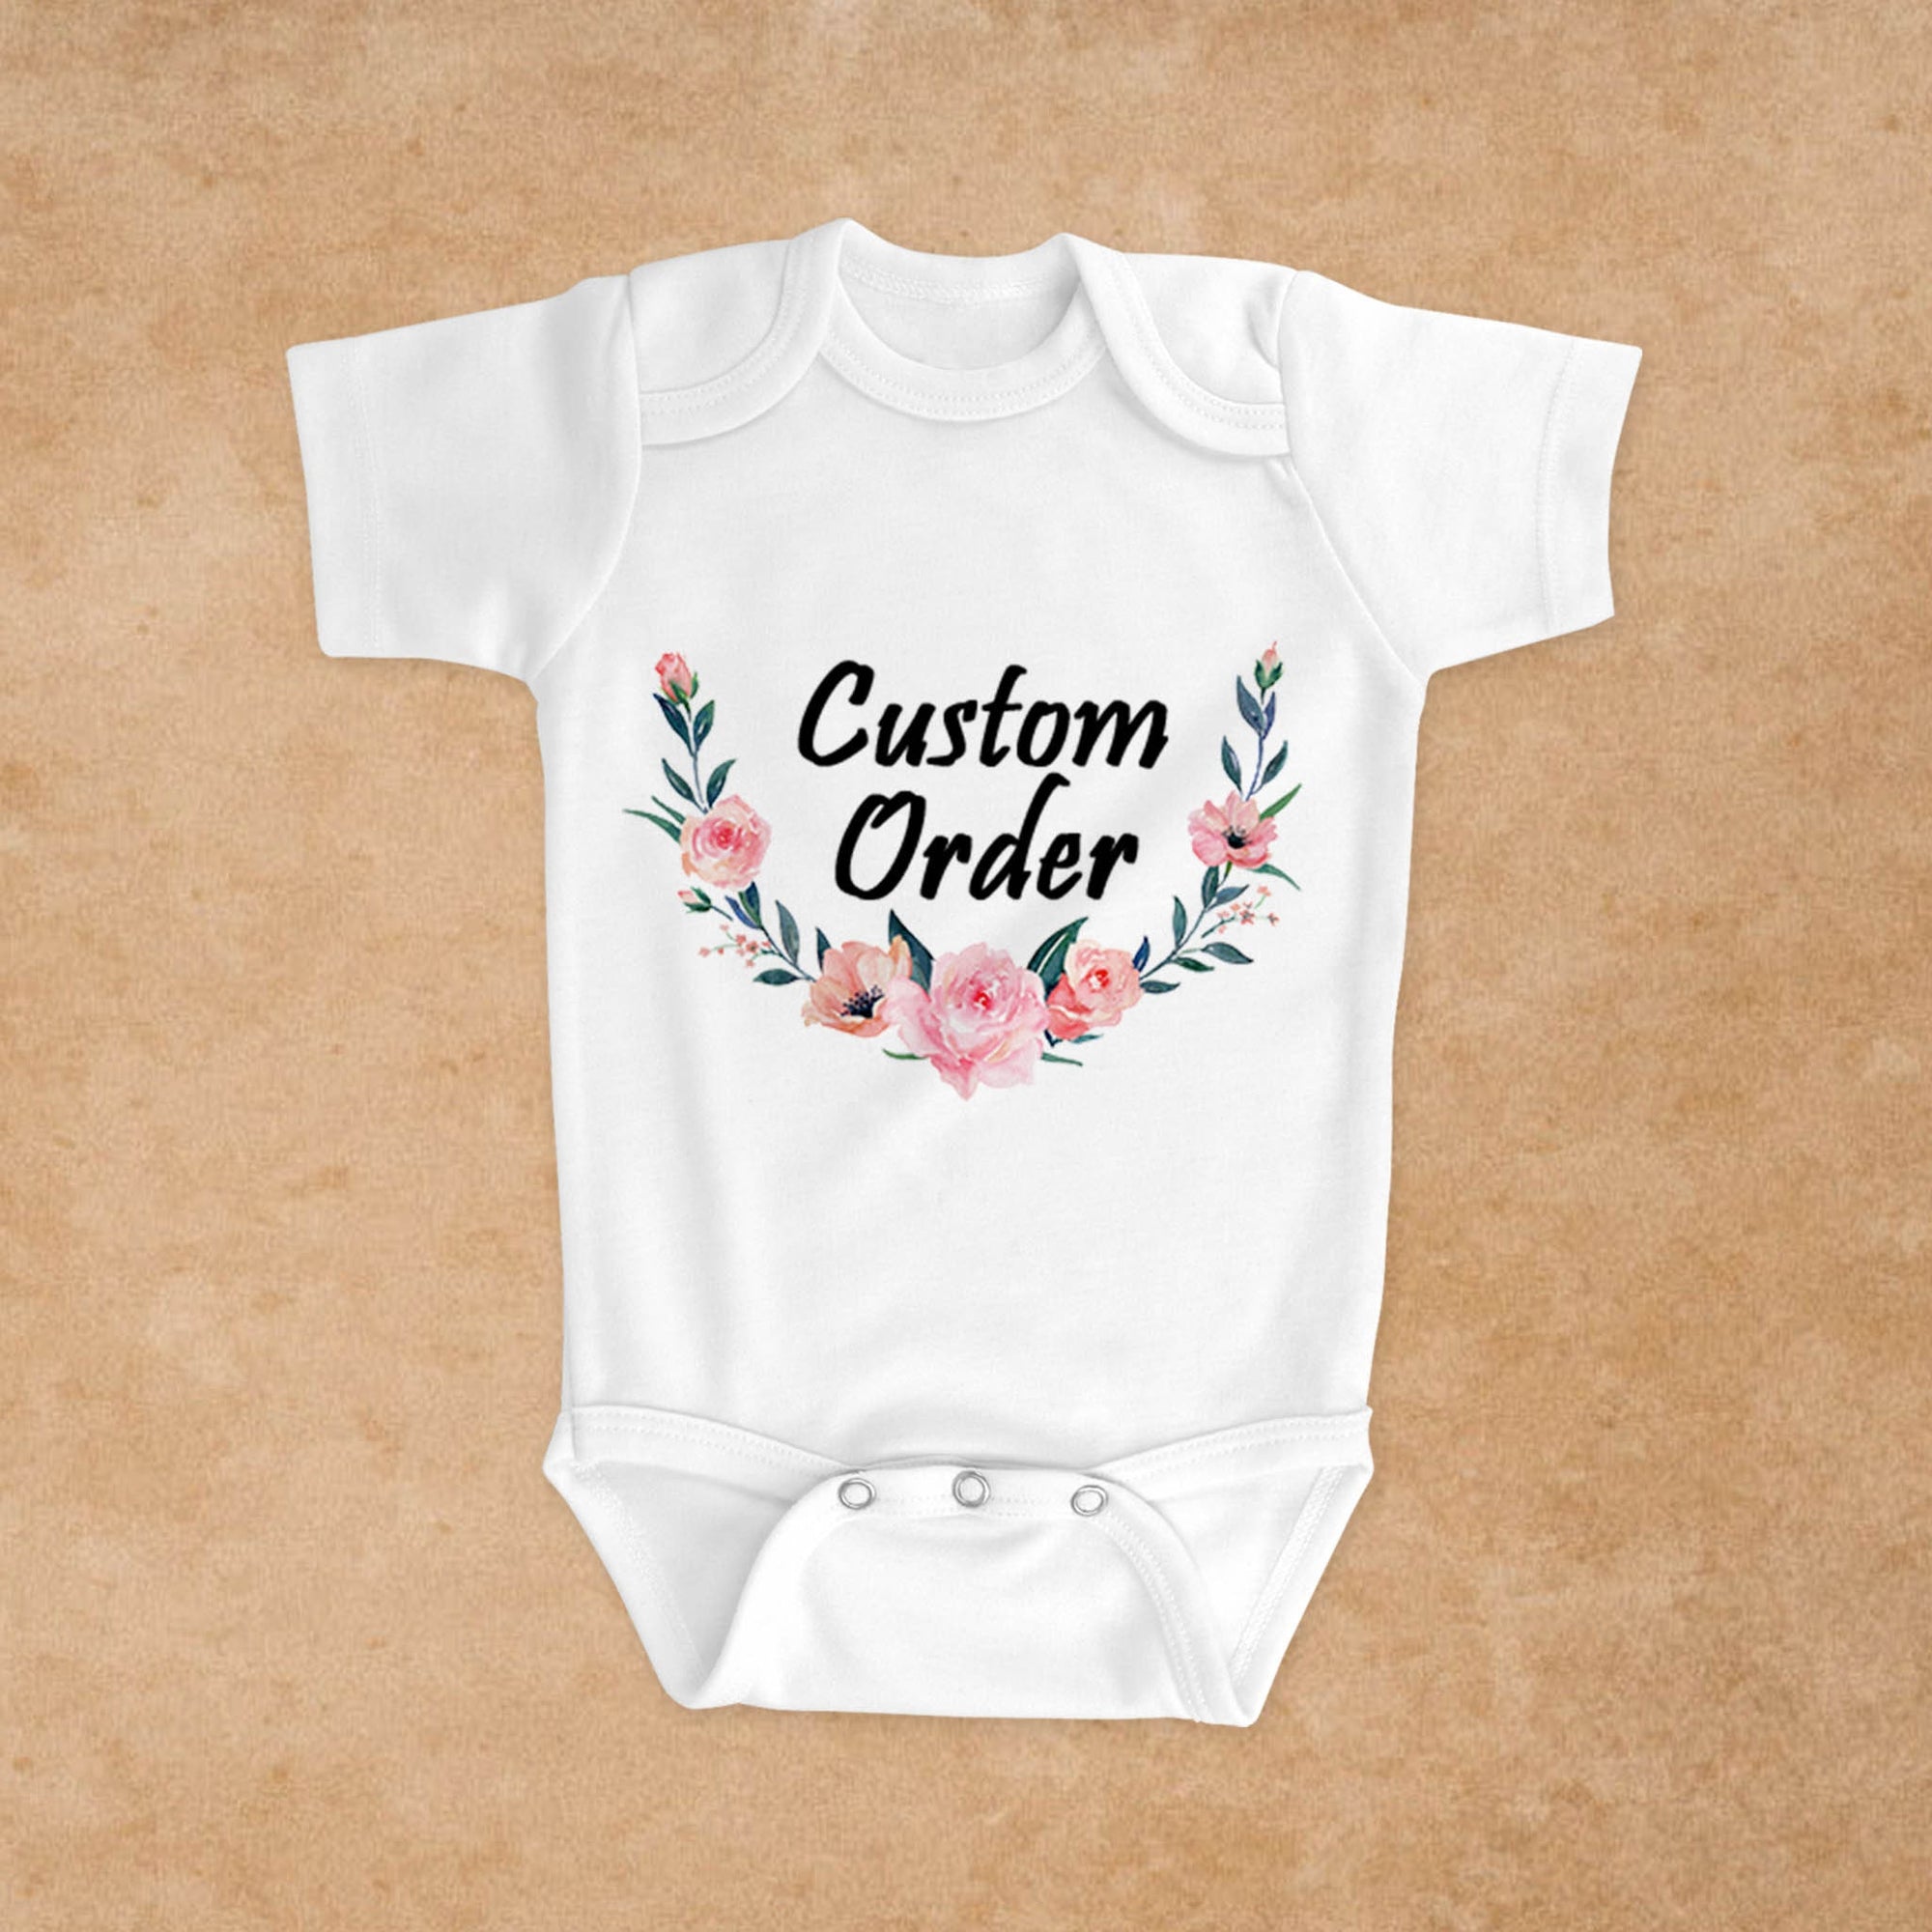 Personalized Baby Onesie | Custom Baby Gifts | Baby Shower | Custom Order